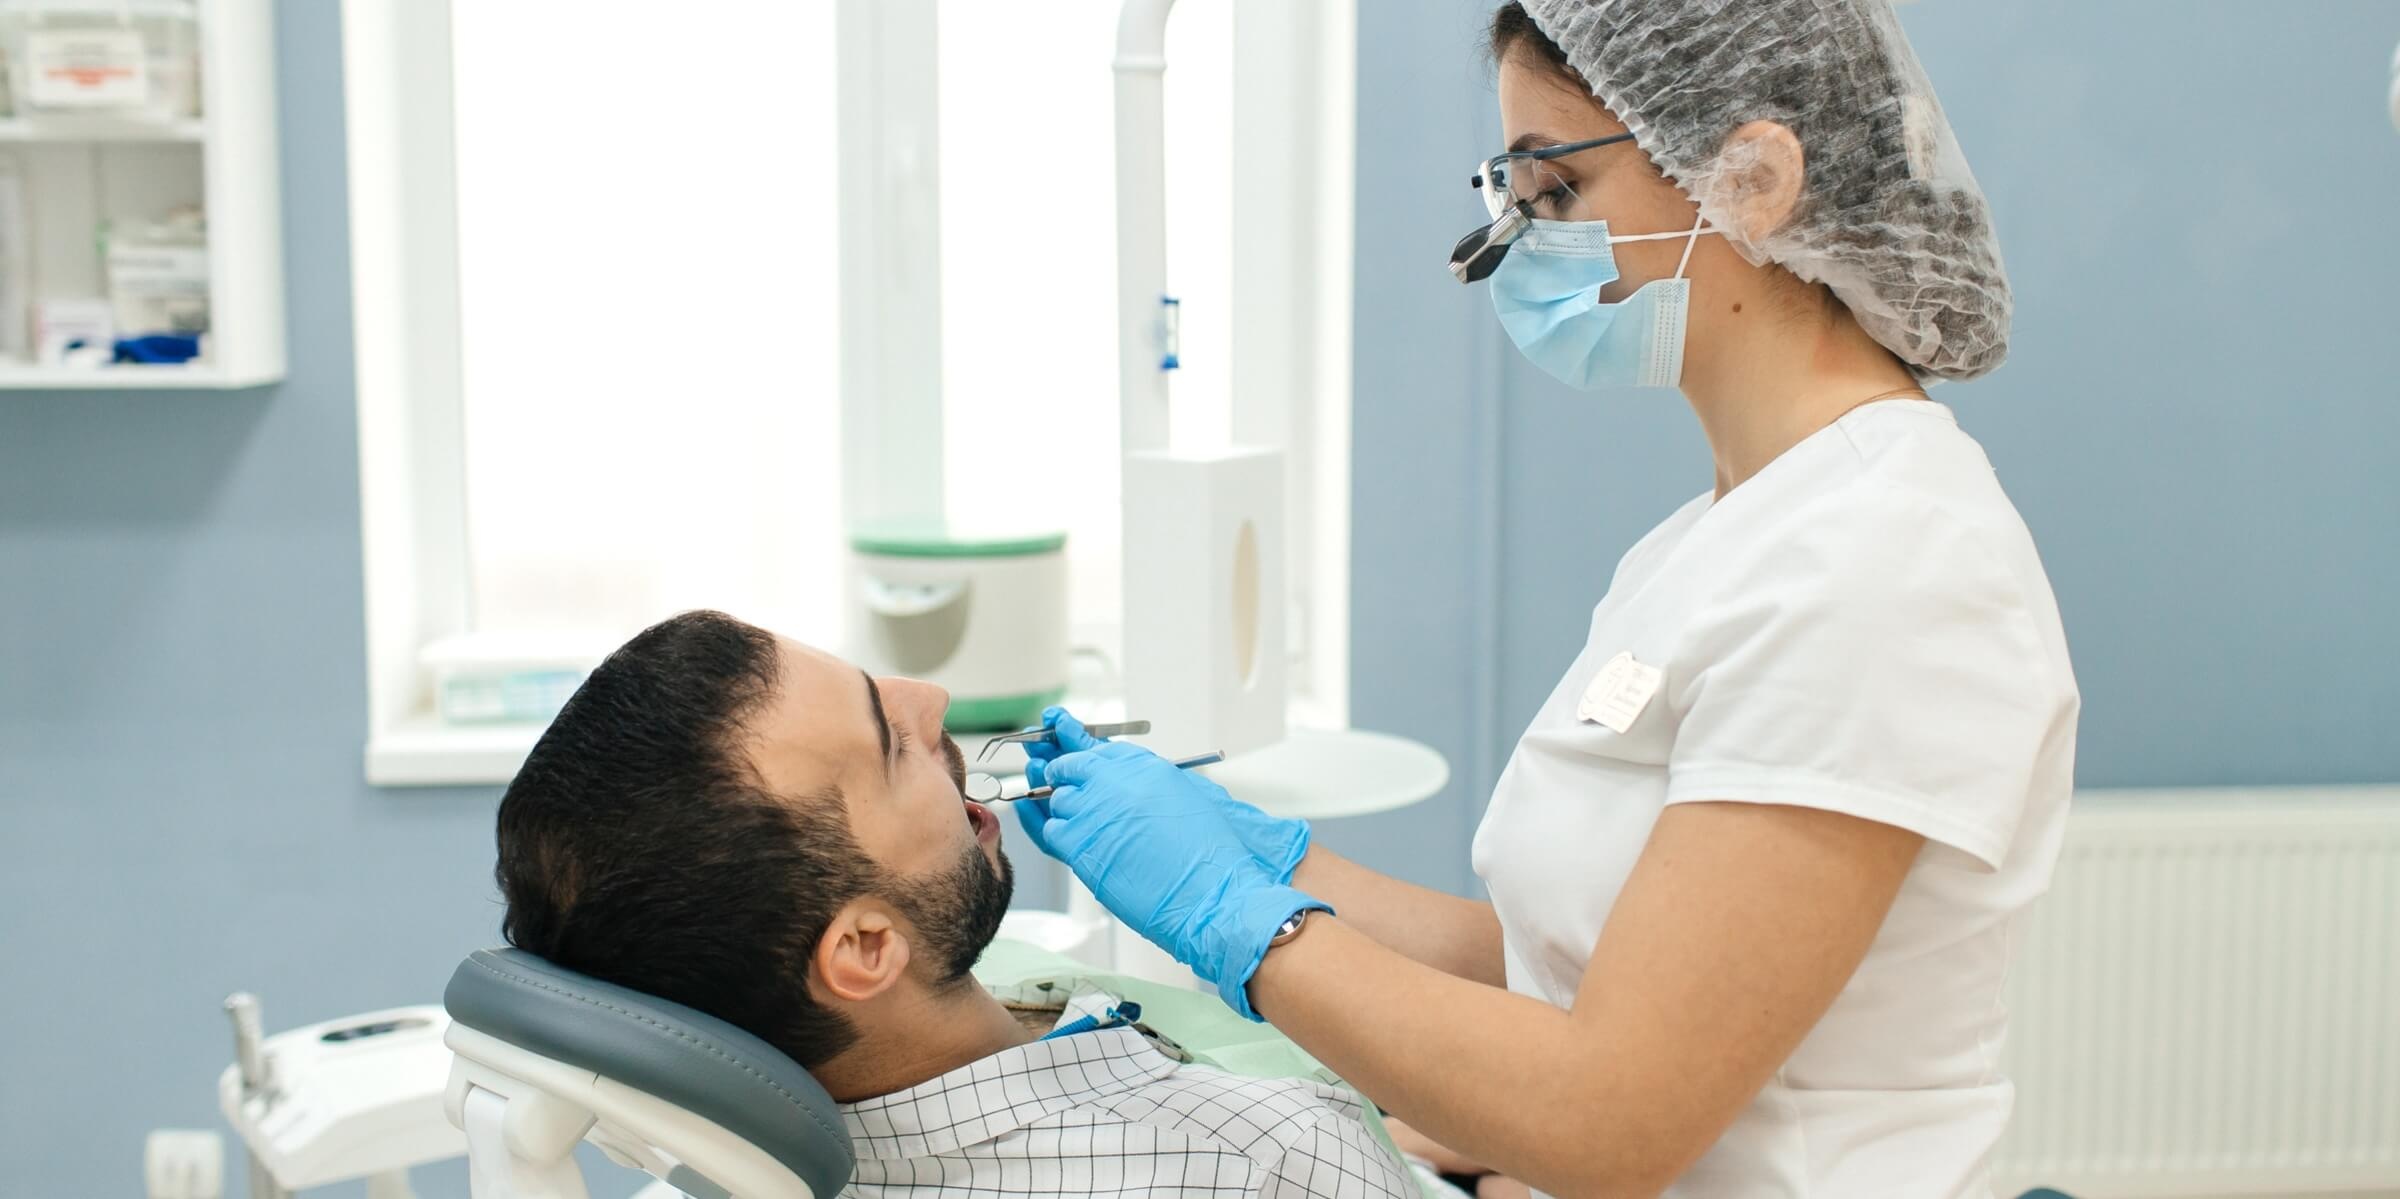 Стоматолог хирург заканчивает трансплантацию зуба